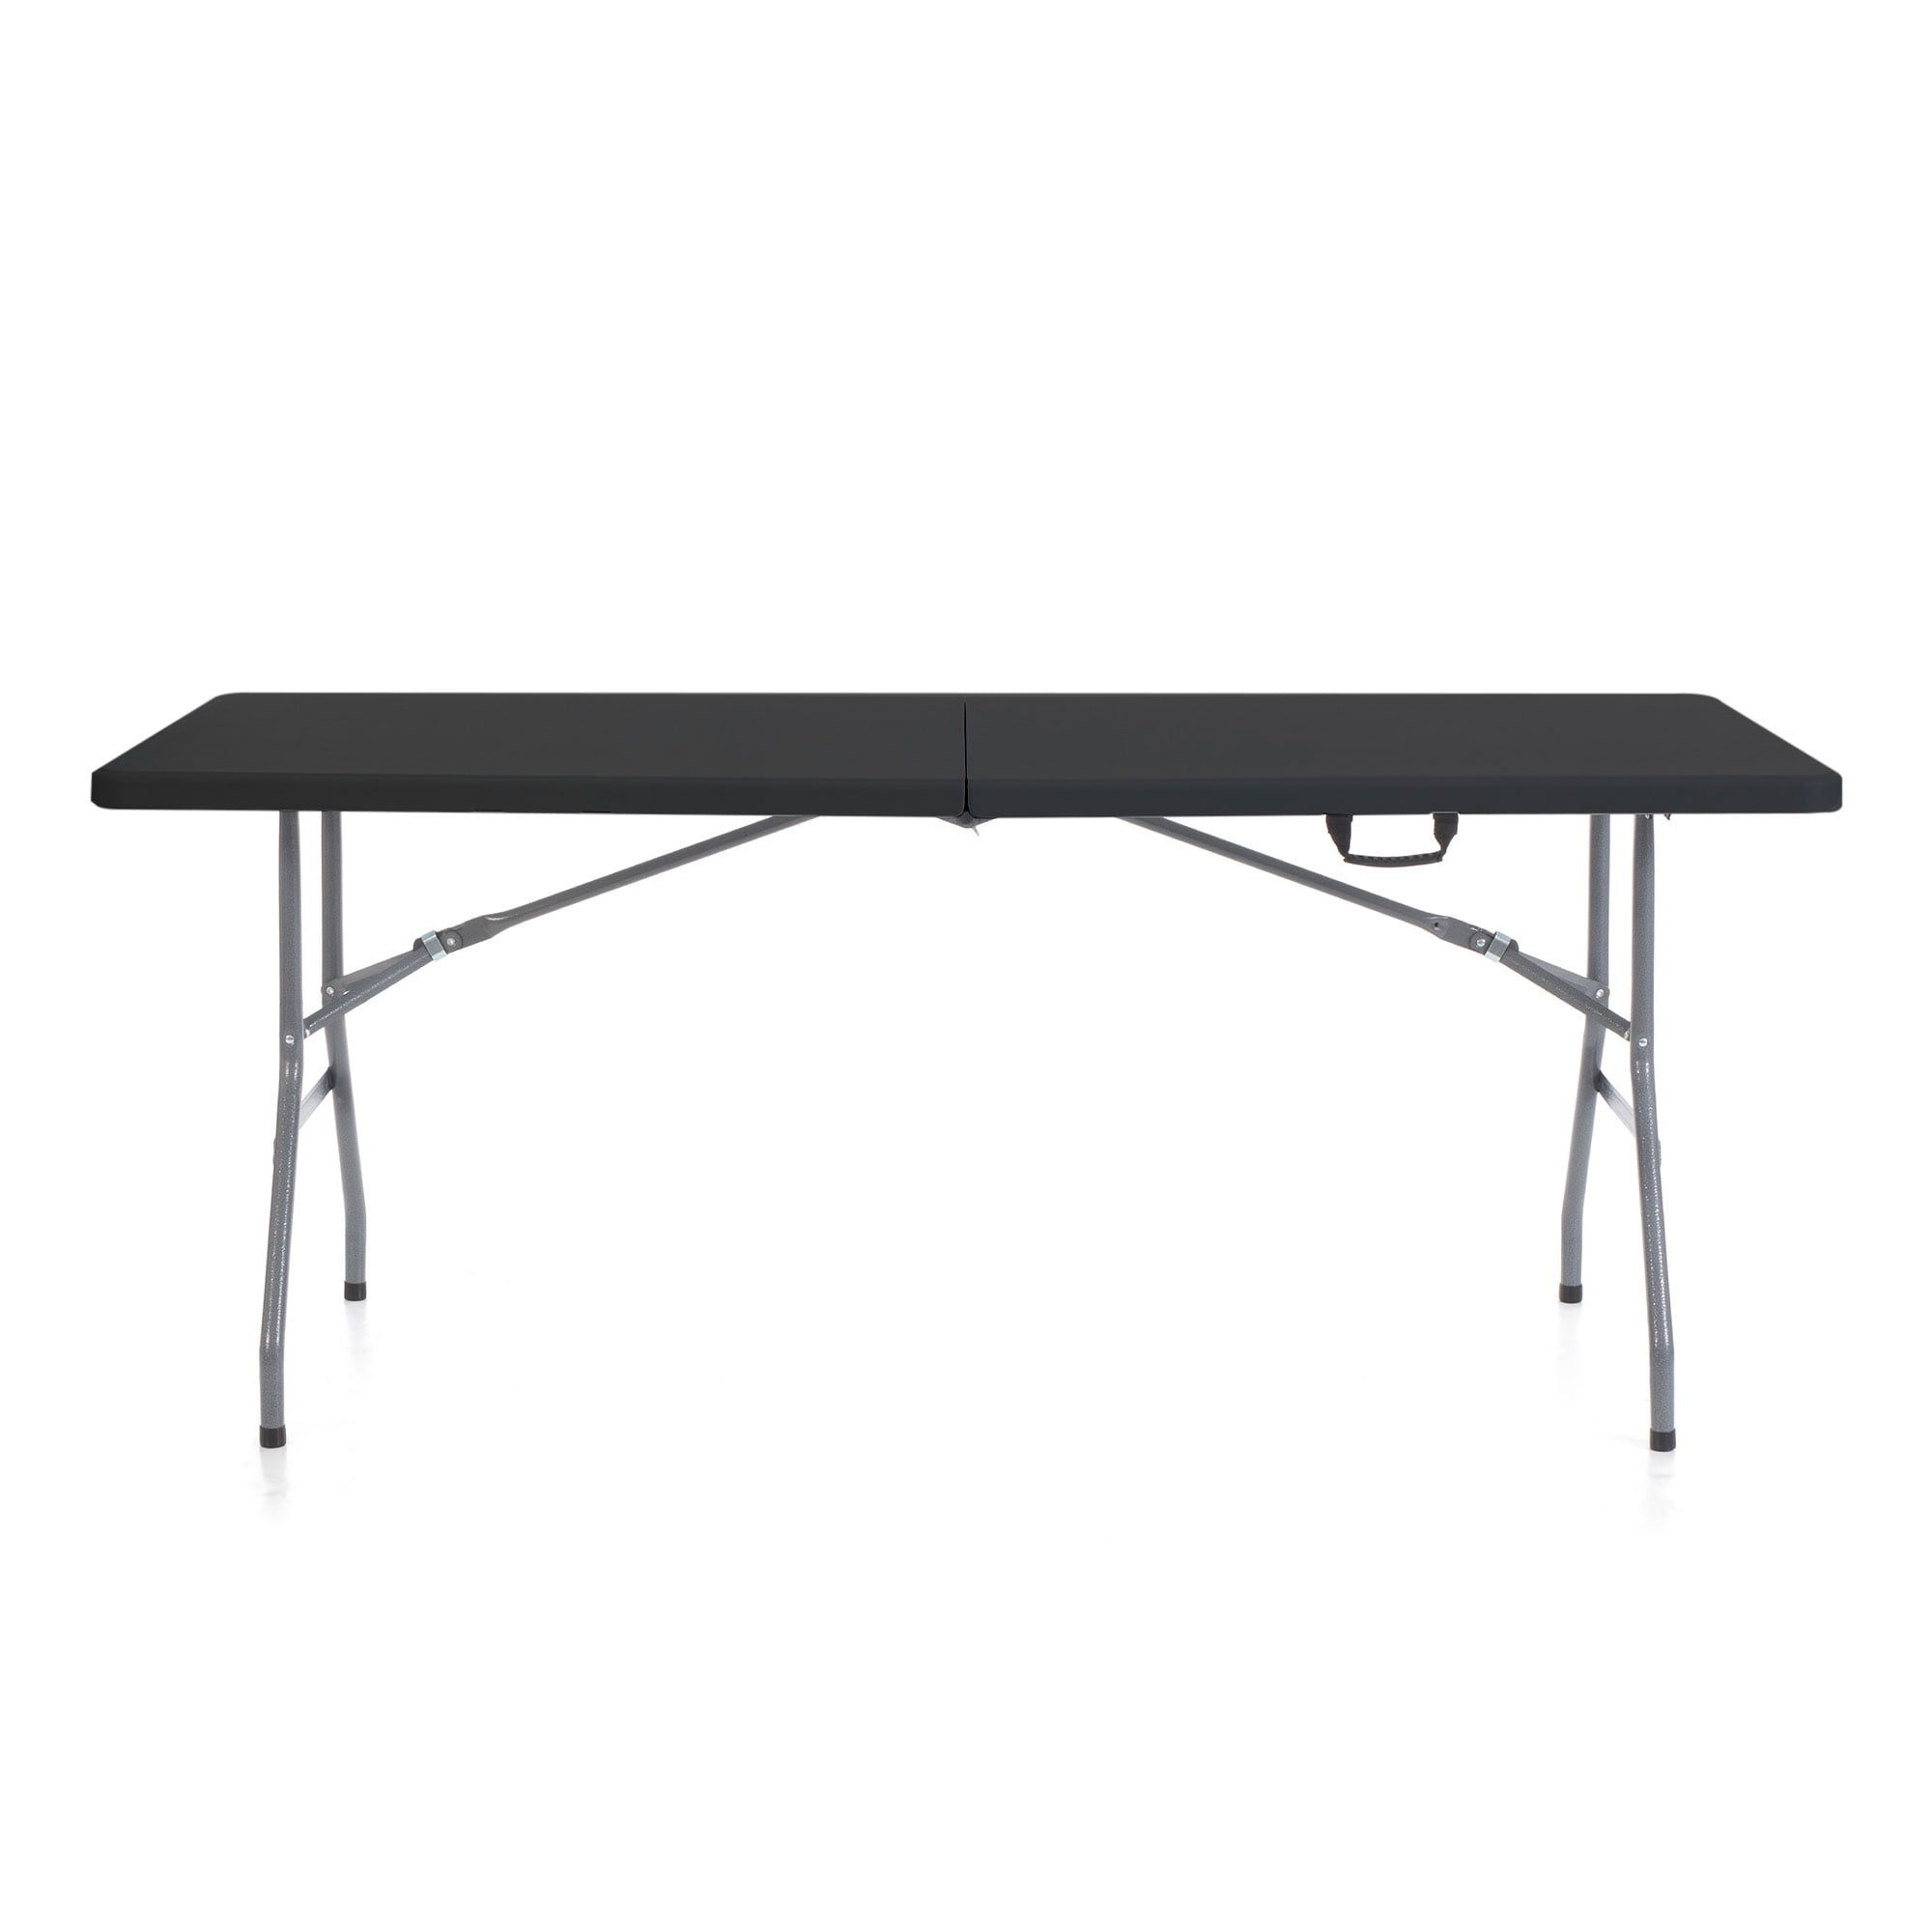 62.125 x 19.5 Foldable Craft Table - Venue Marketplace